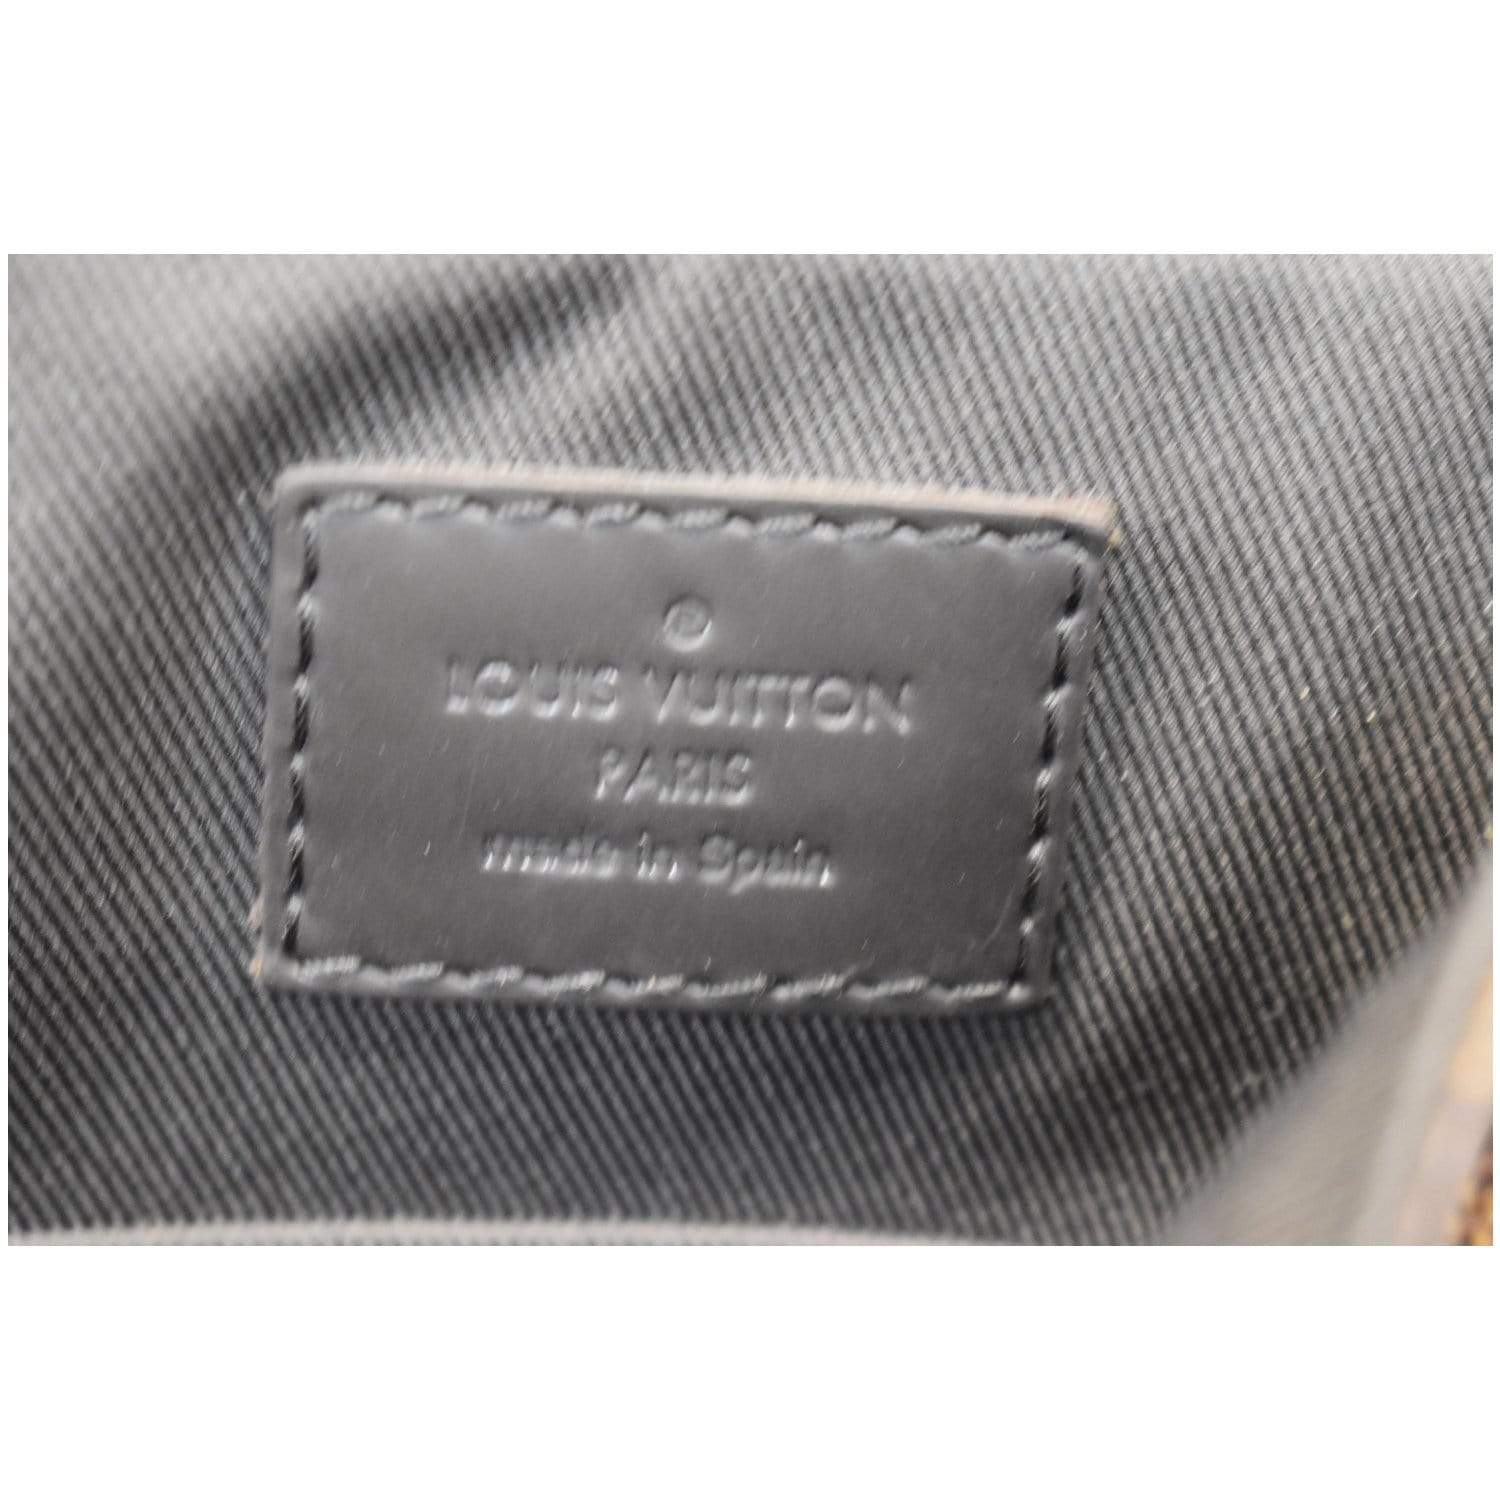 Louis Vuitton Damier Ebene District PM Messenger Bag 78lk322s